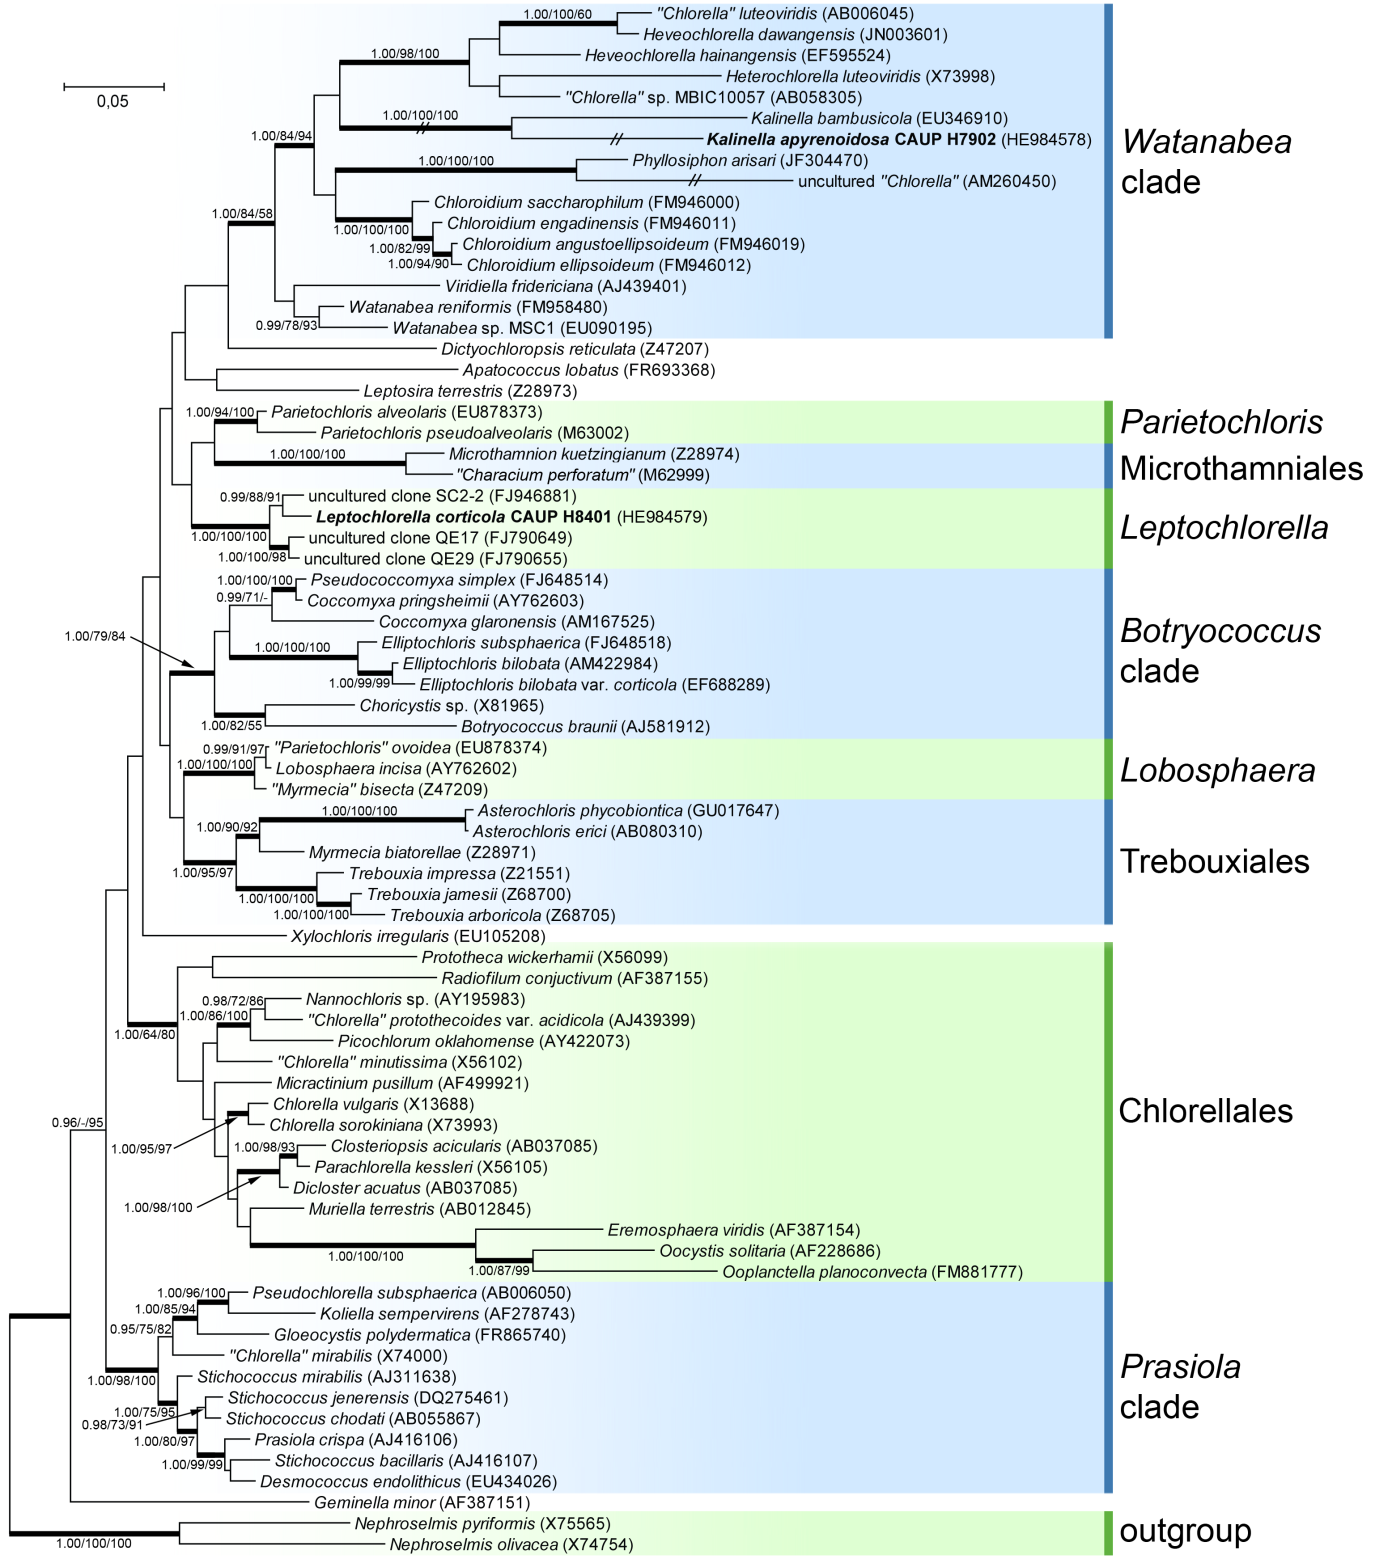 Příloha 1 Fylogeneze třídy Trebouxiophyceae podle studie